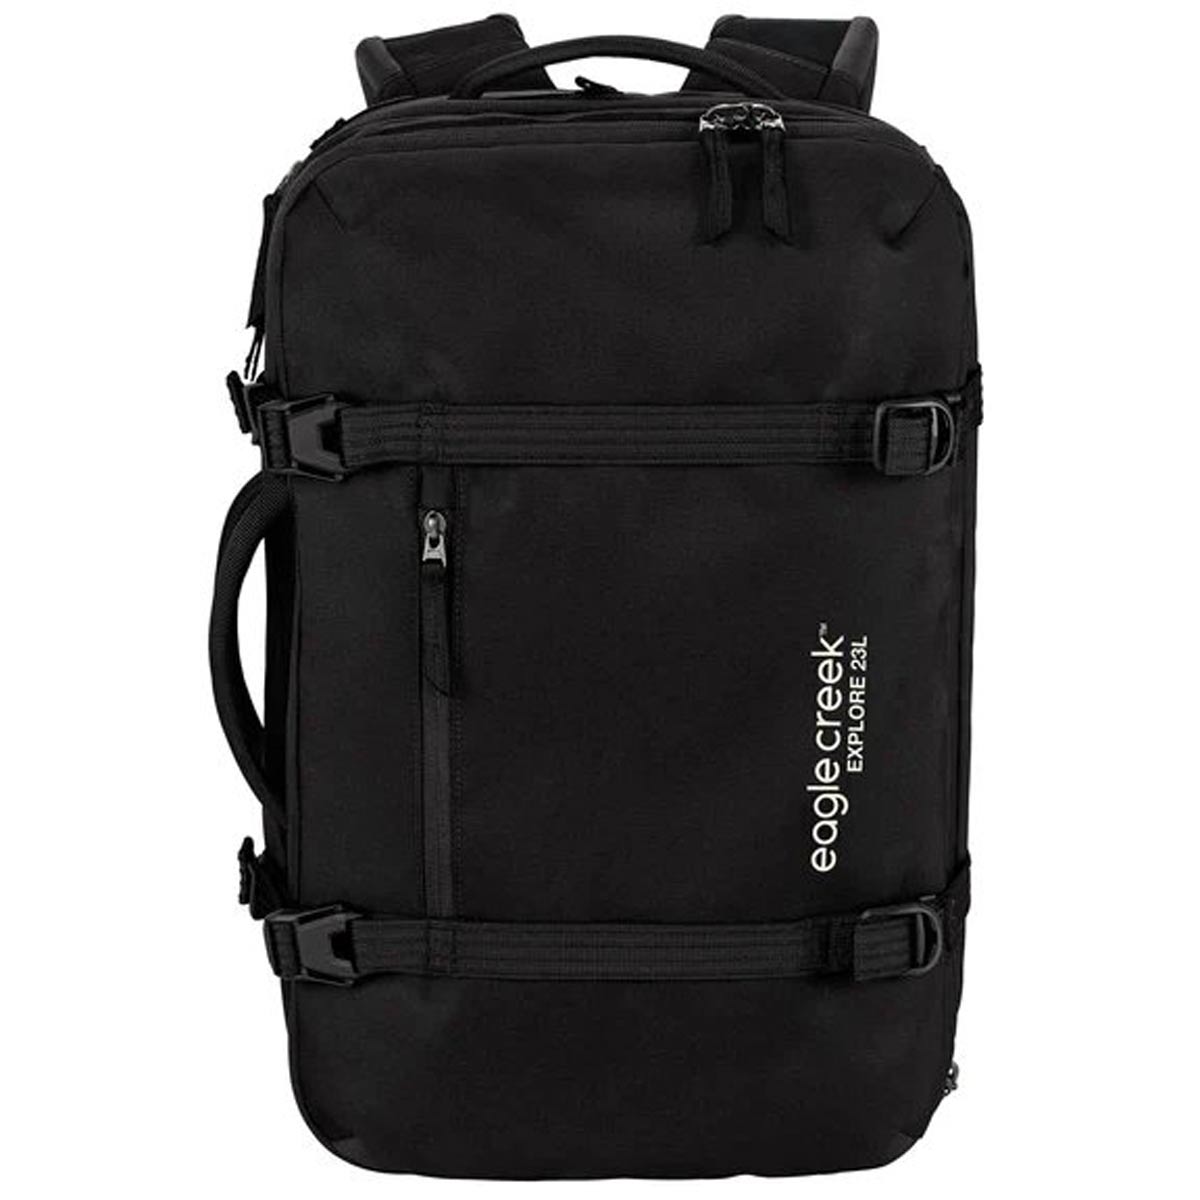 Backpack 23L medium black